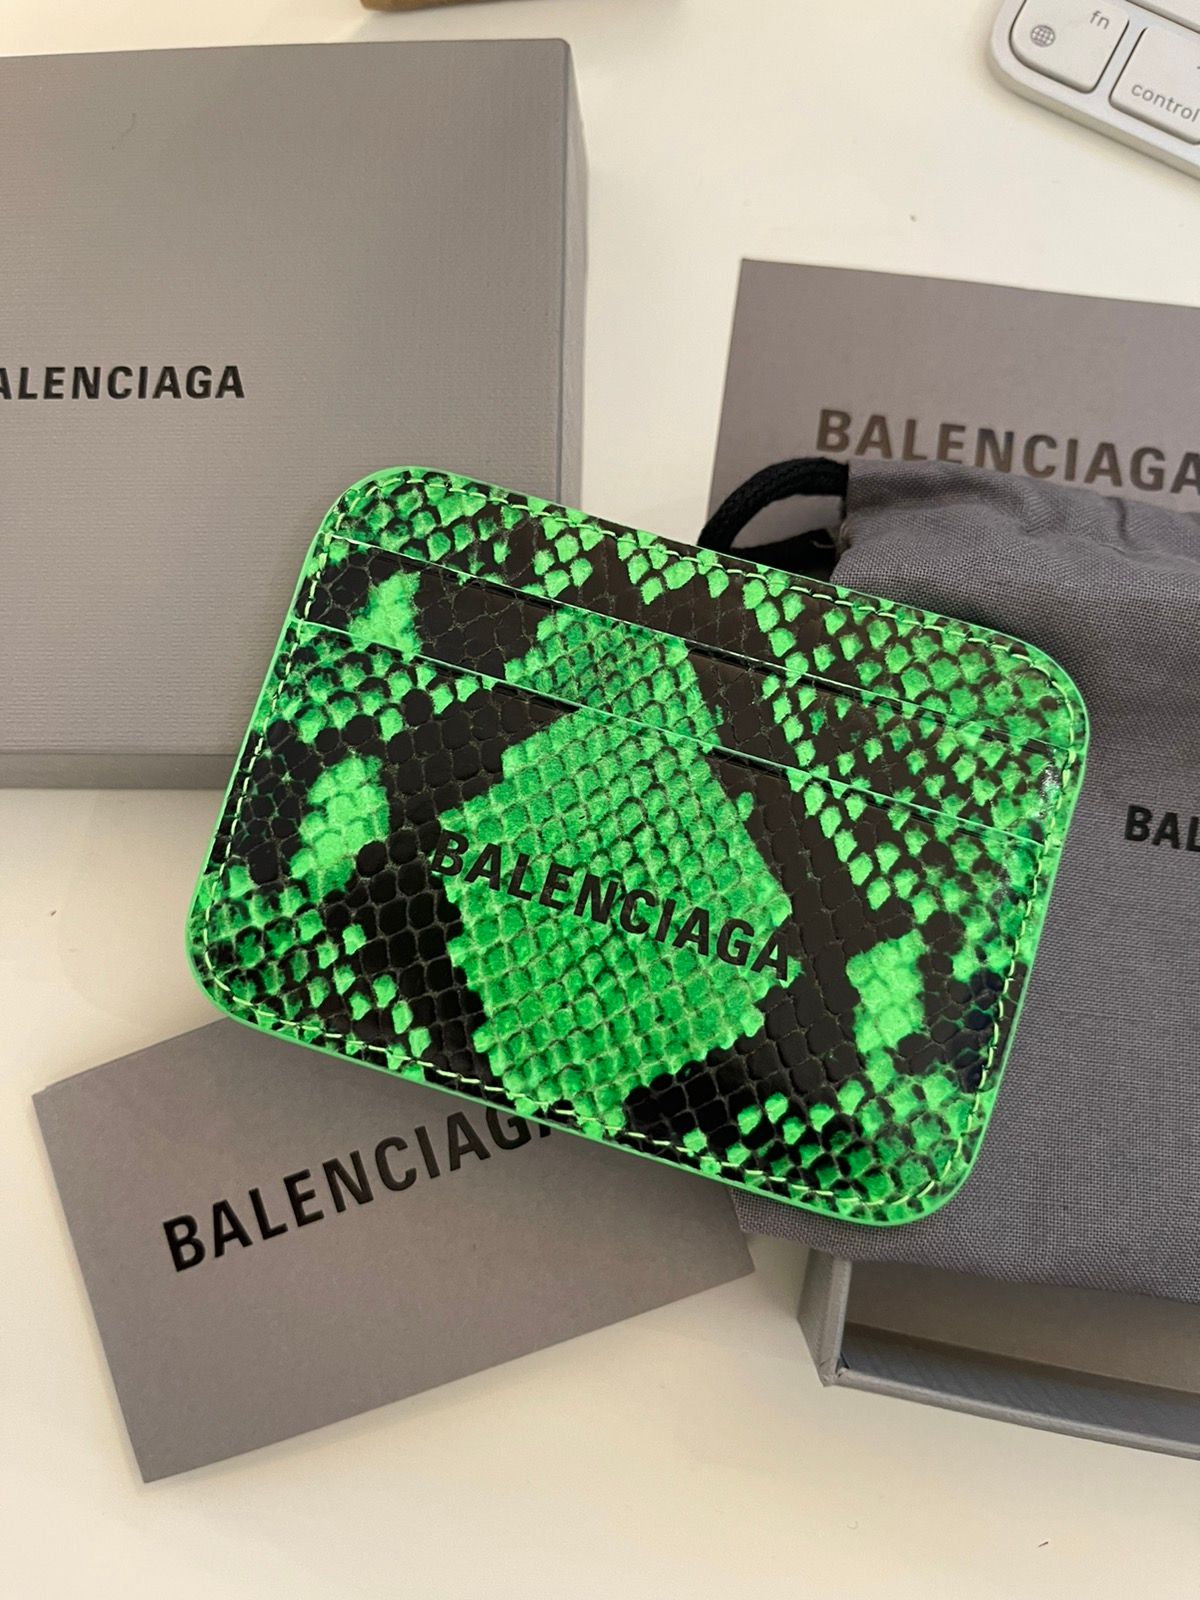 Balenciaga CUSTOM PYTHON PRINT LEATHER GREEN CARD WALLER